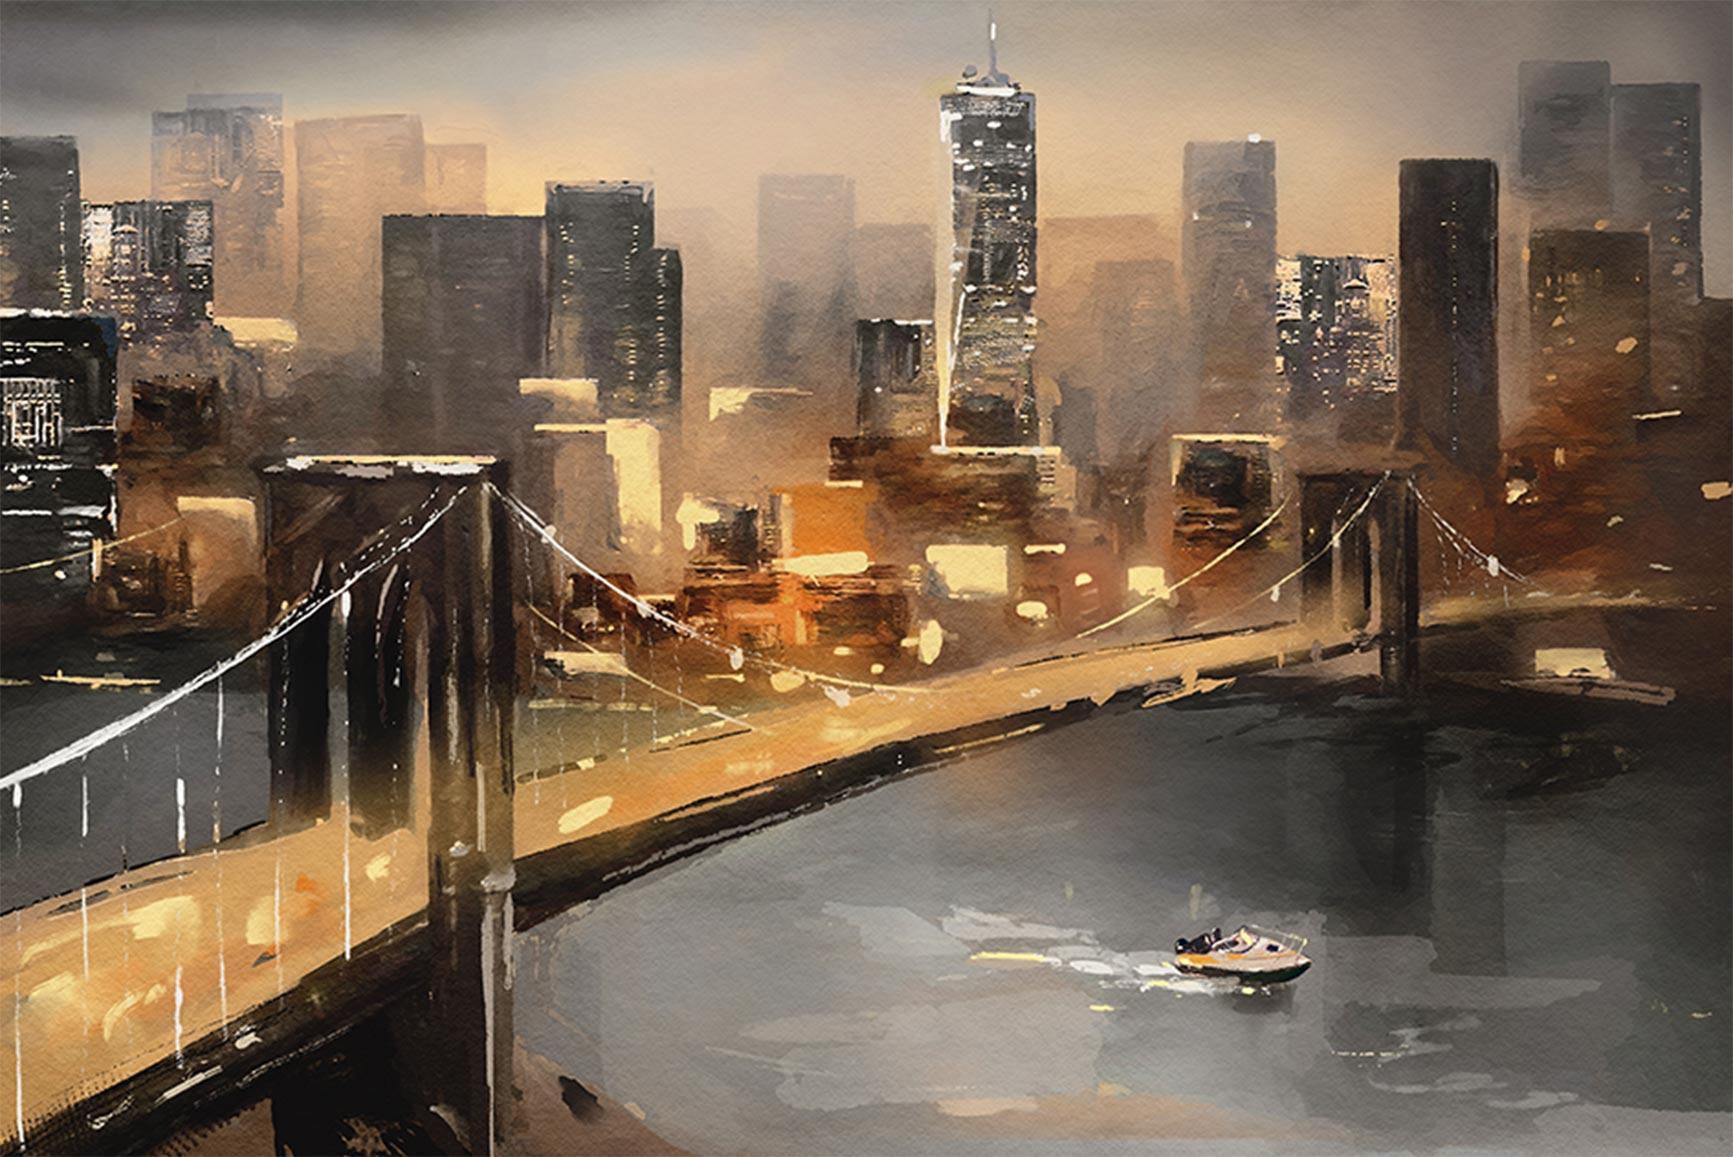 Quadro Retangular  - Ponte do Brooklyn (pintura)